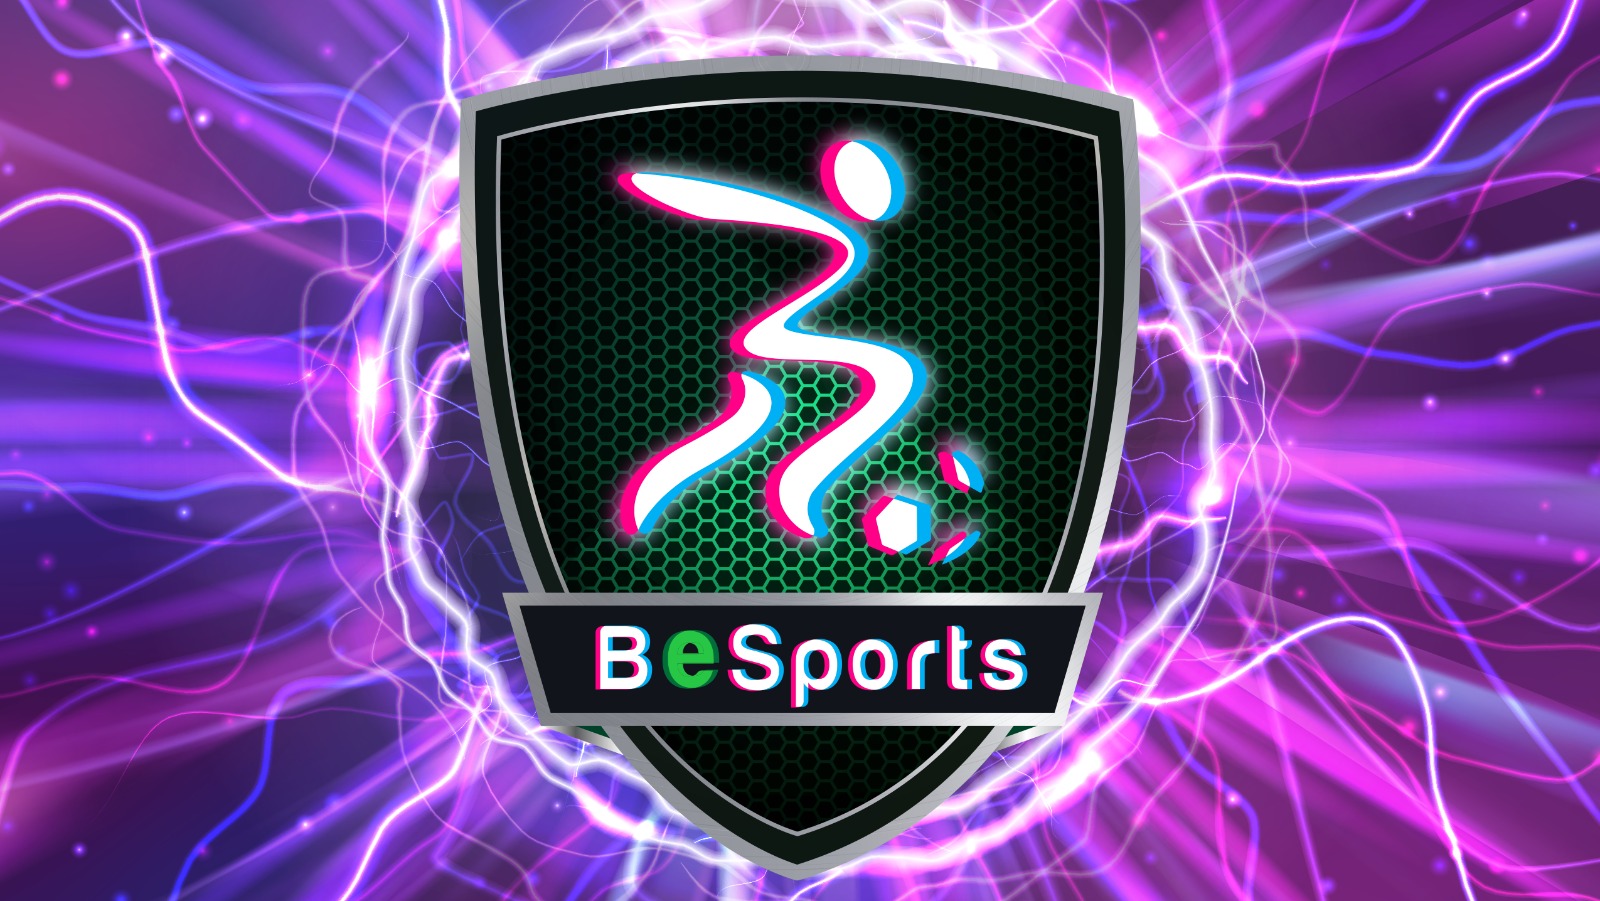 BeSports: i players ufficiali della Salernitana